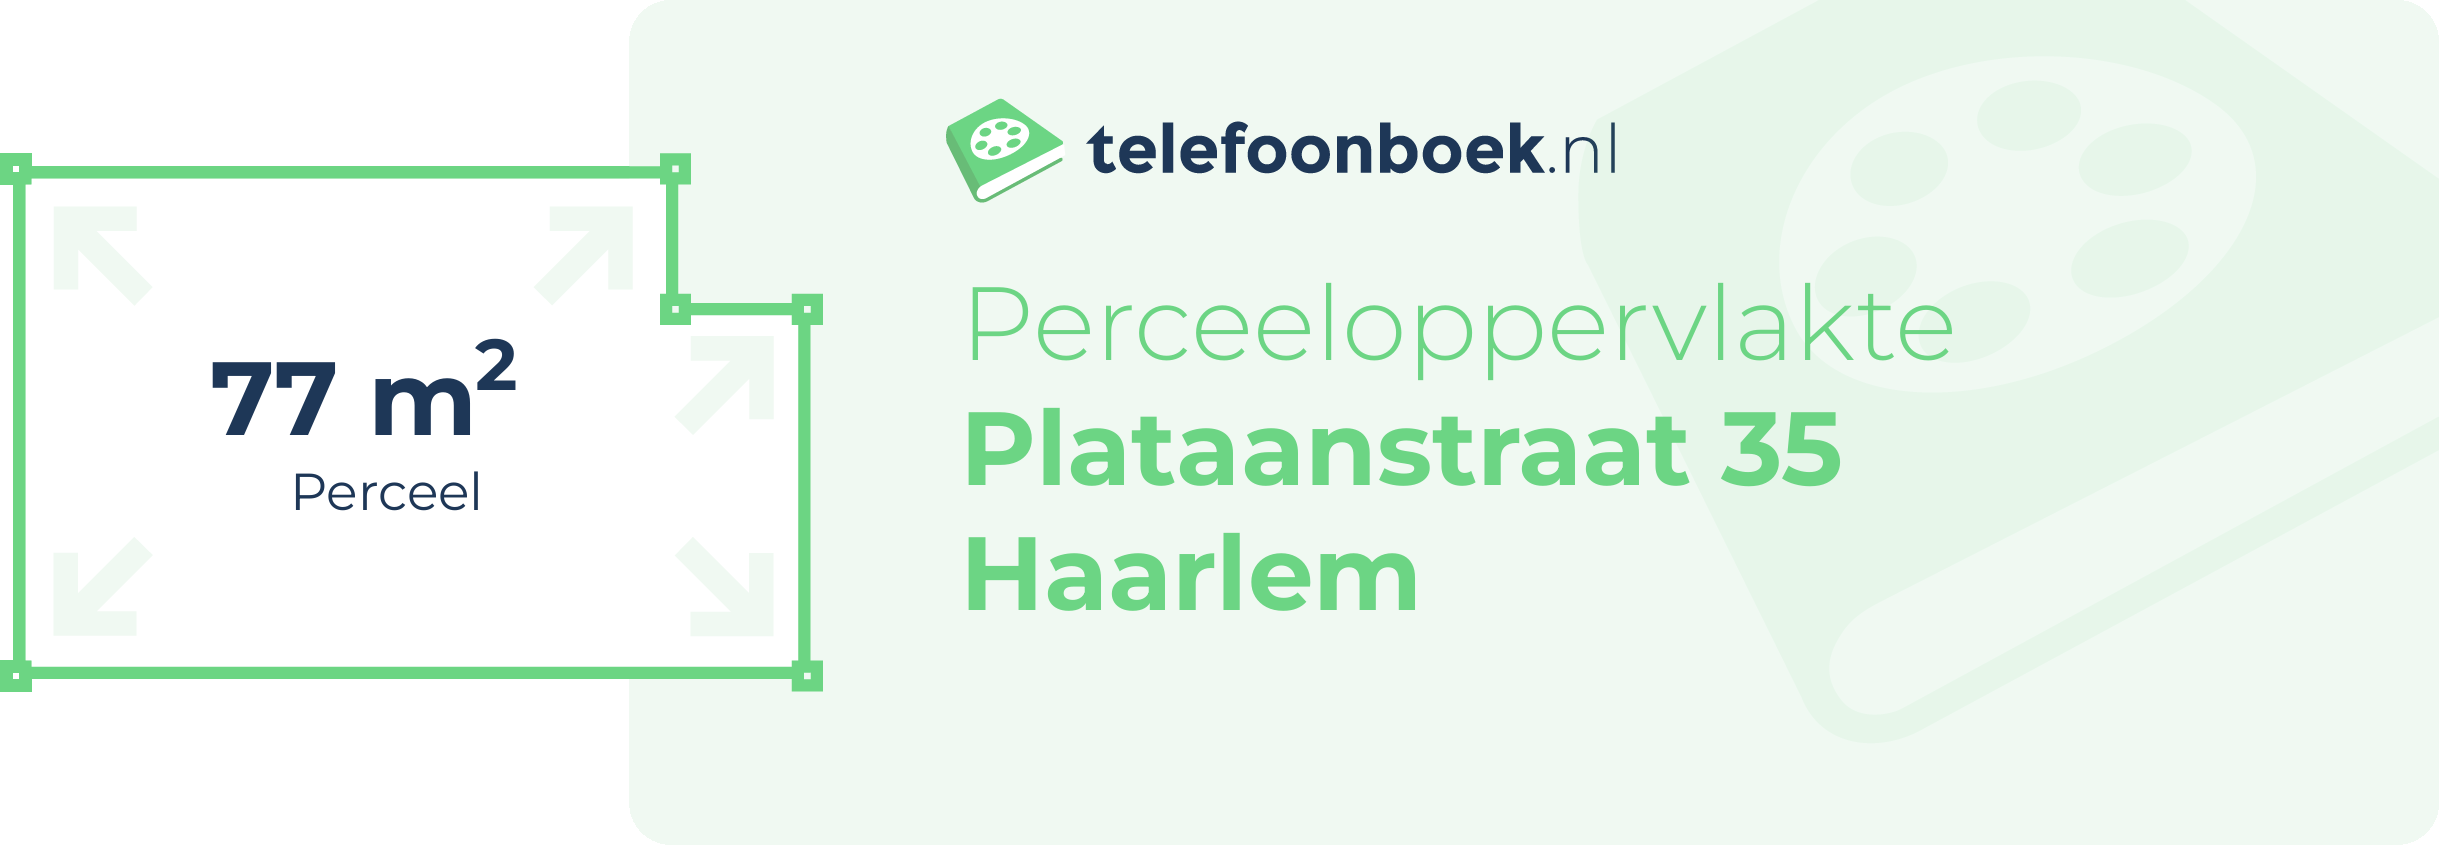 Perceeloppervlakte Plataanstraat 35 Haarlem